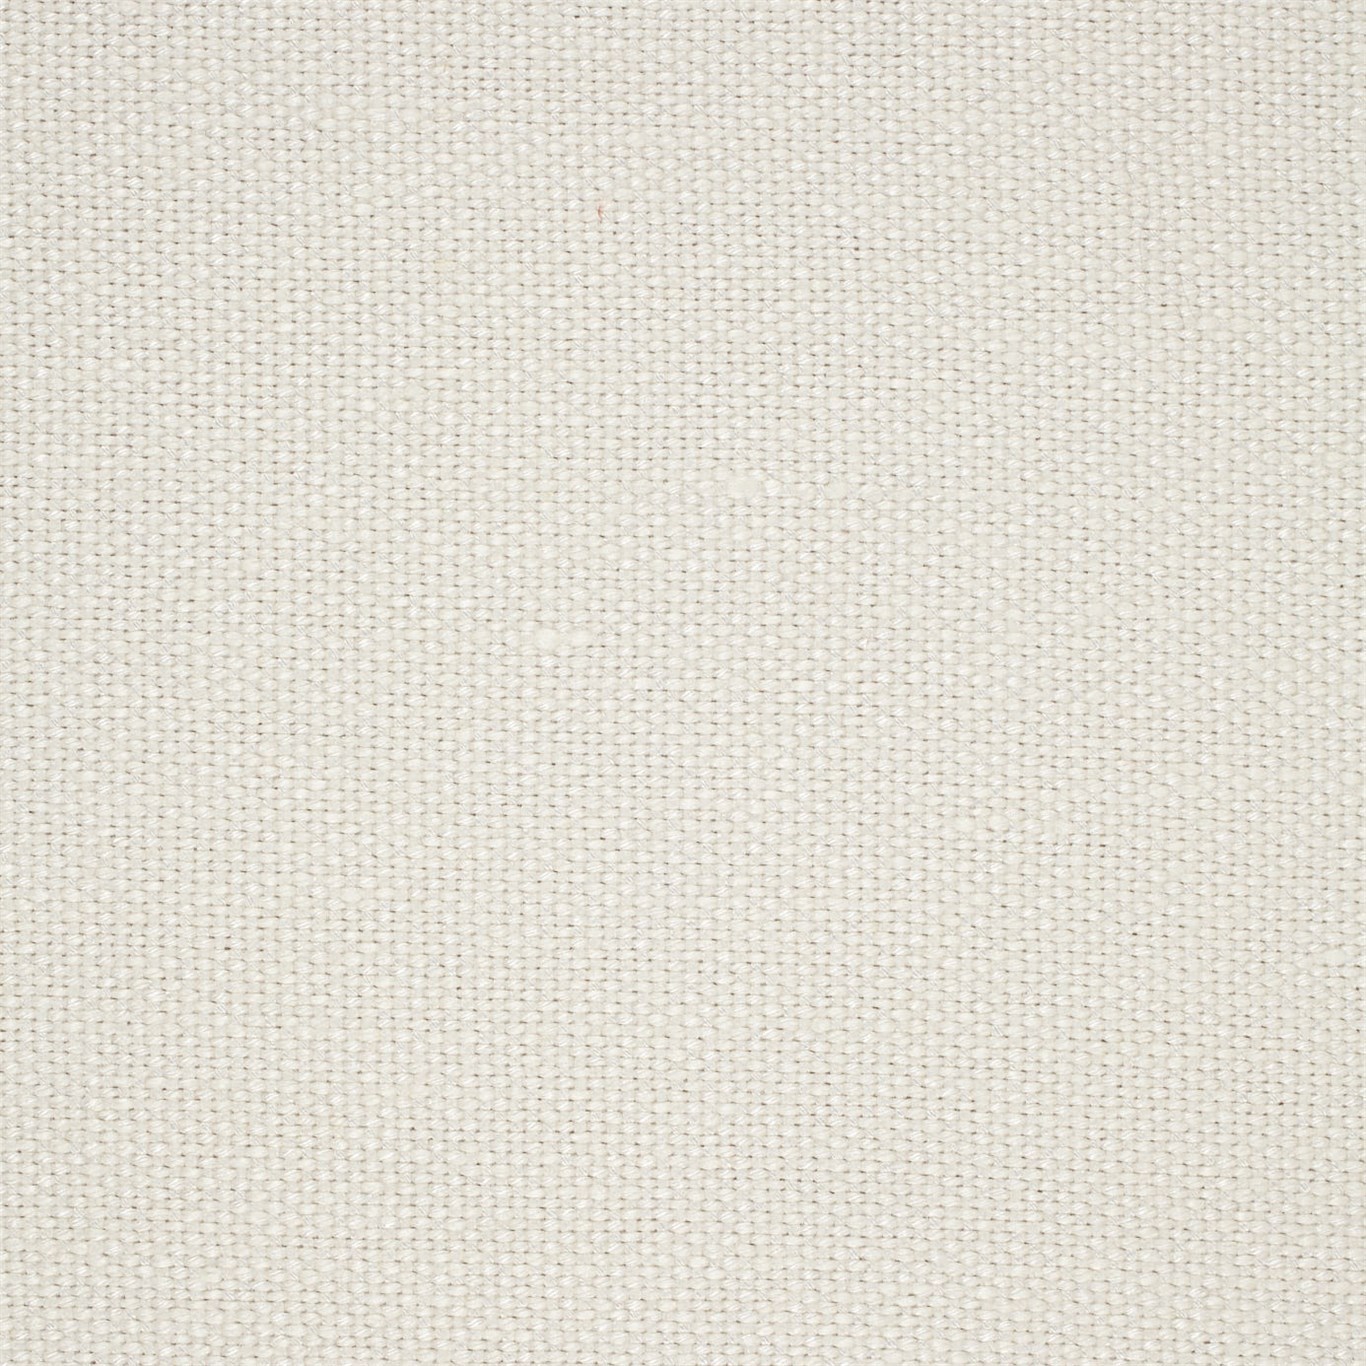 Woodland Plain Ivory Fabric by SAN